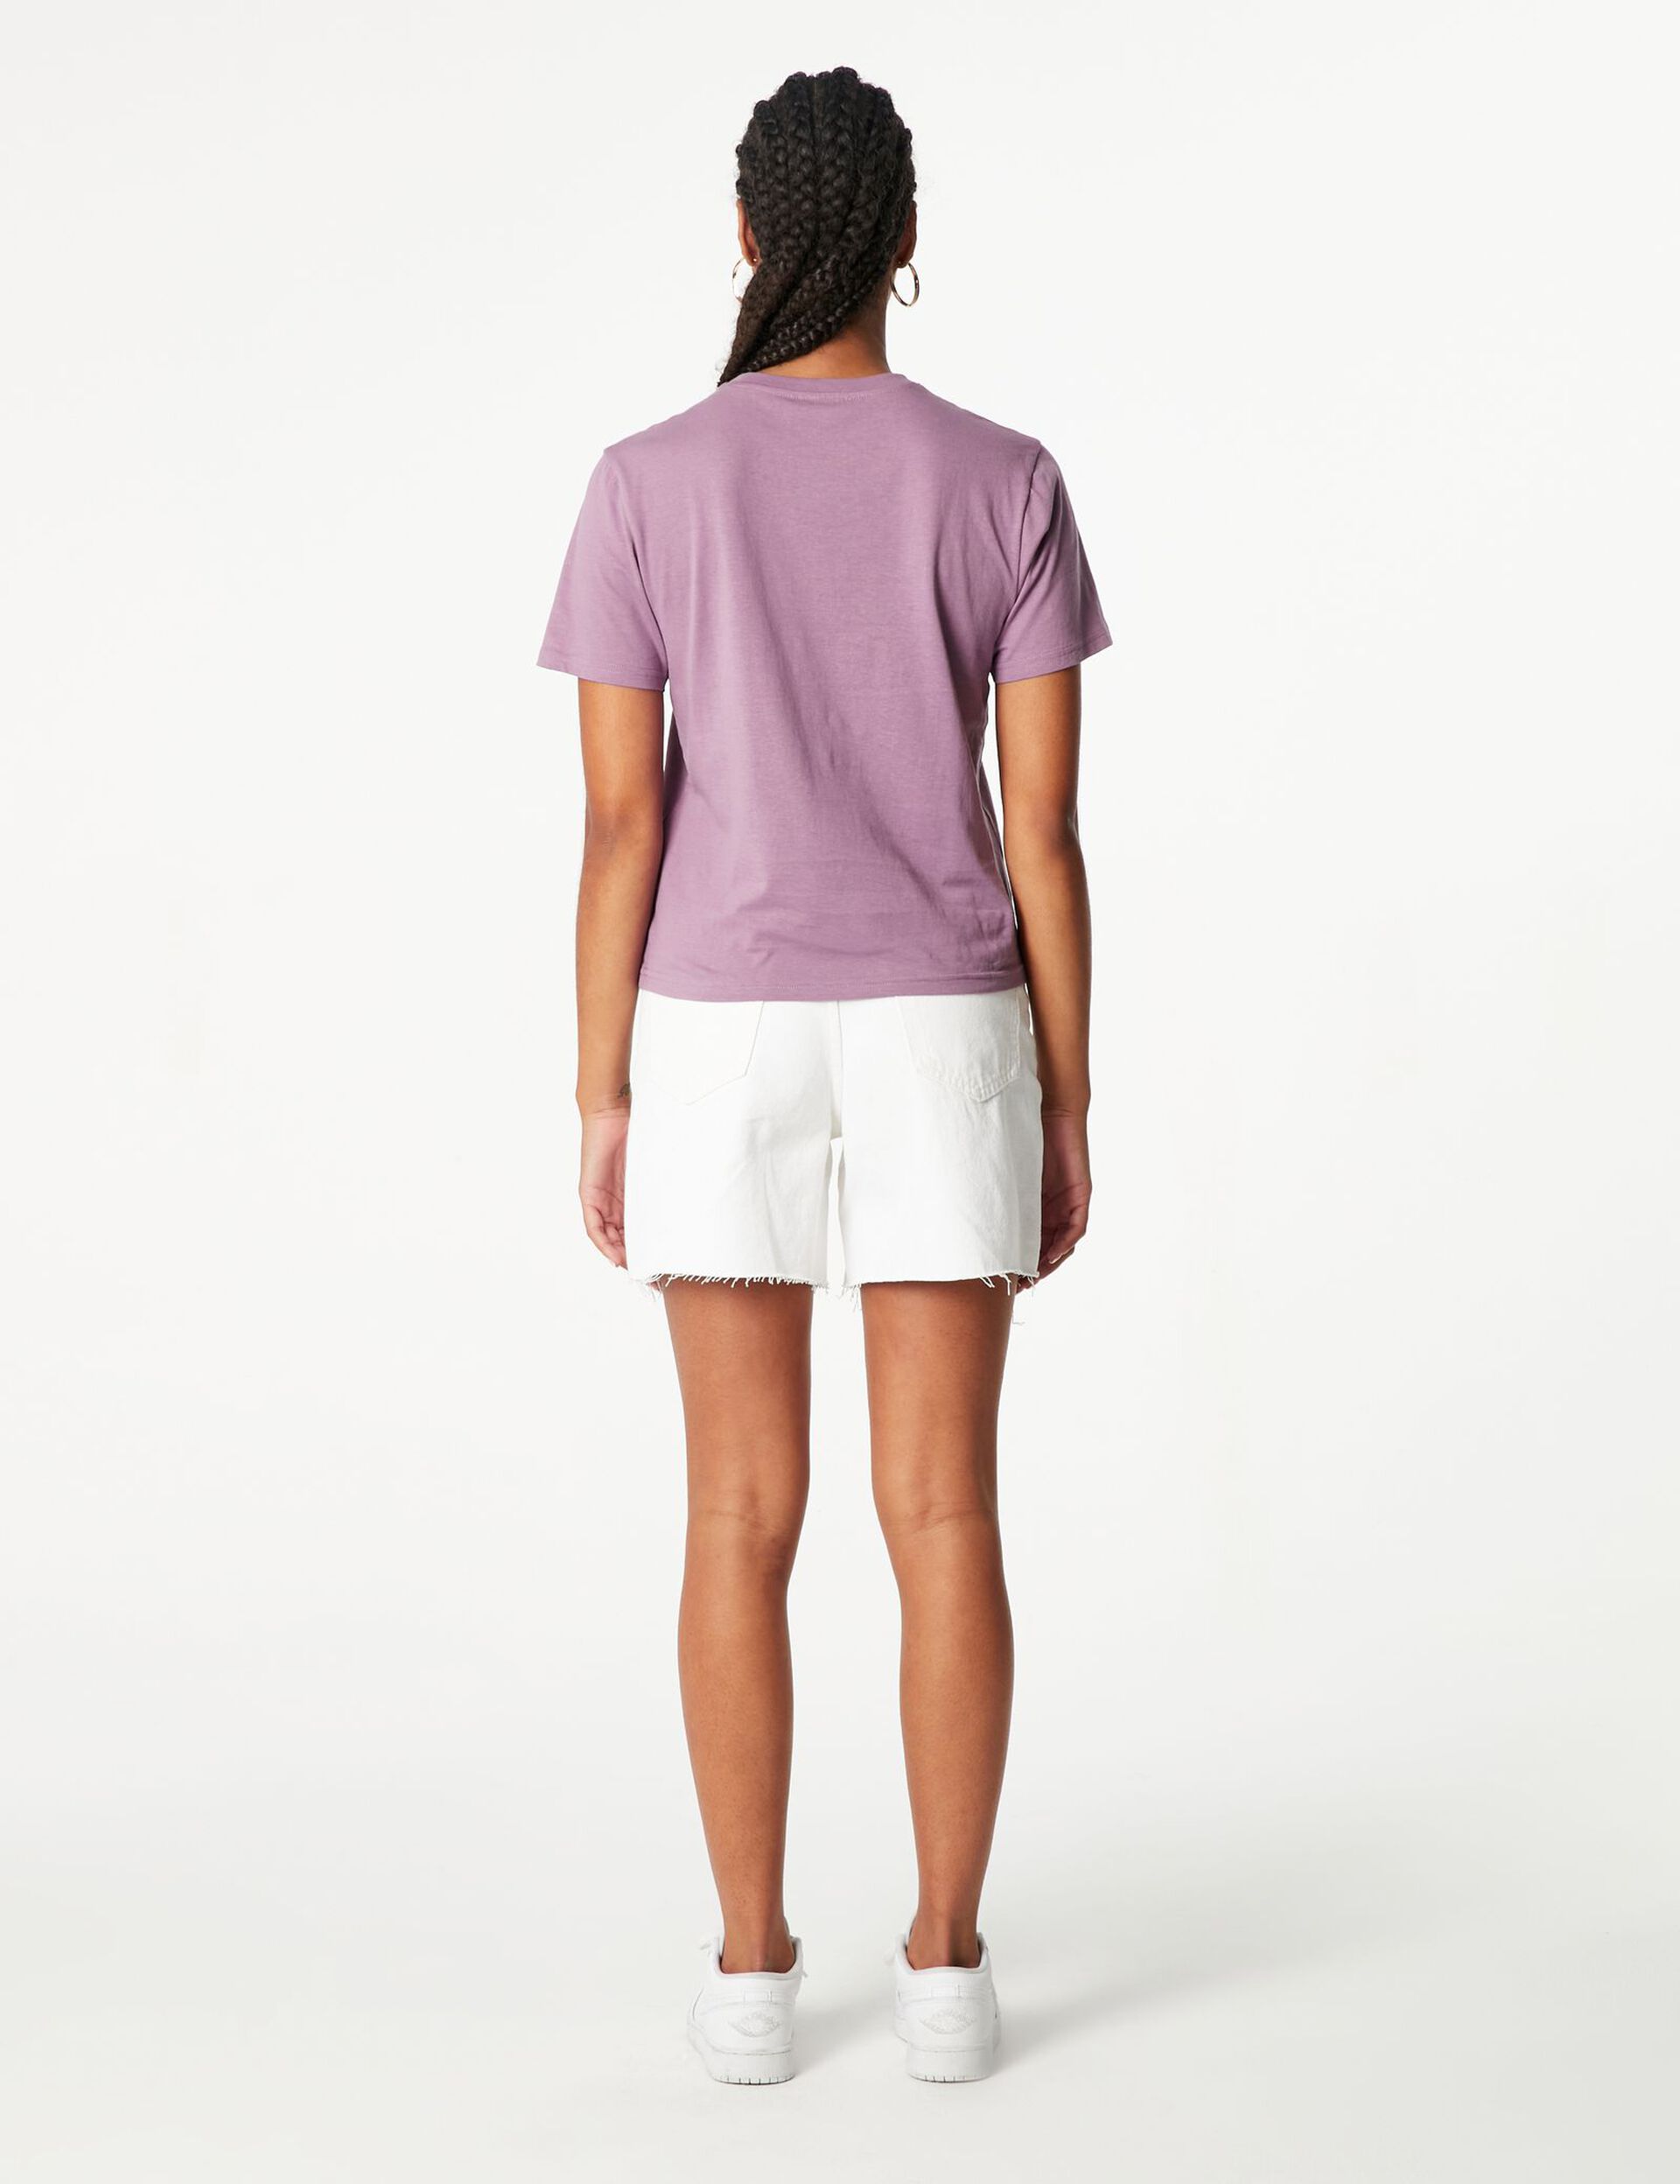 Tee-shirt lovely violet